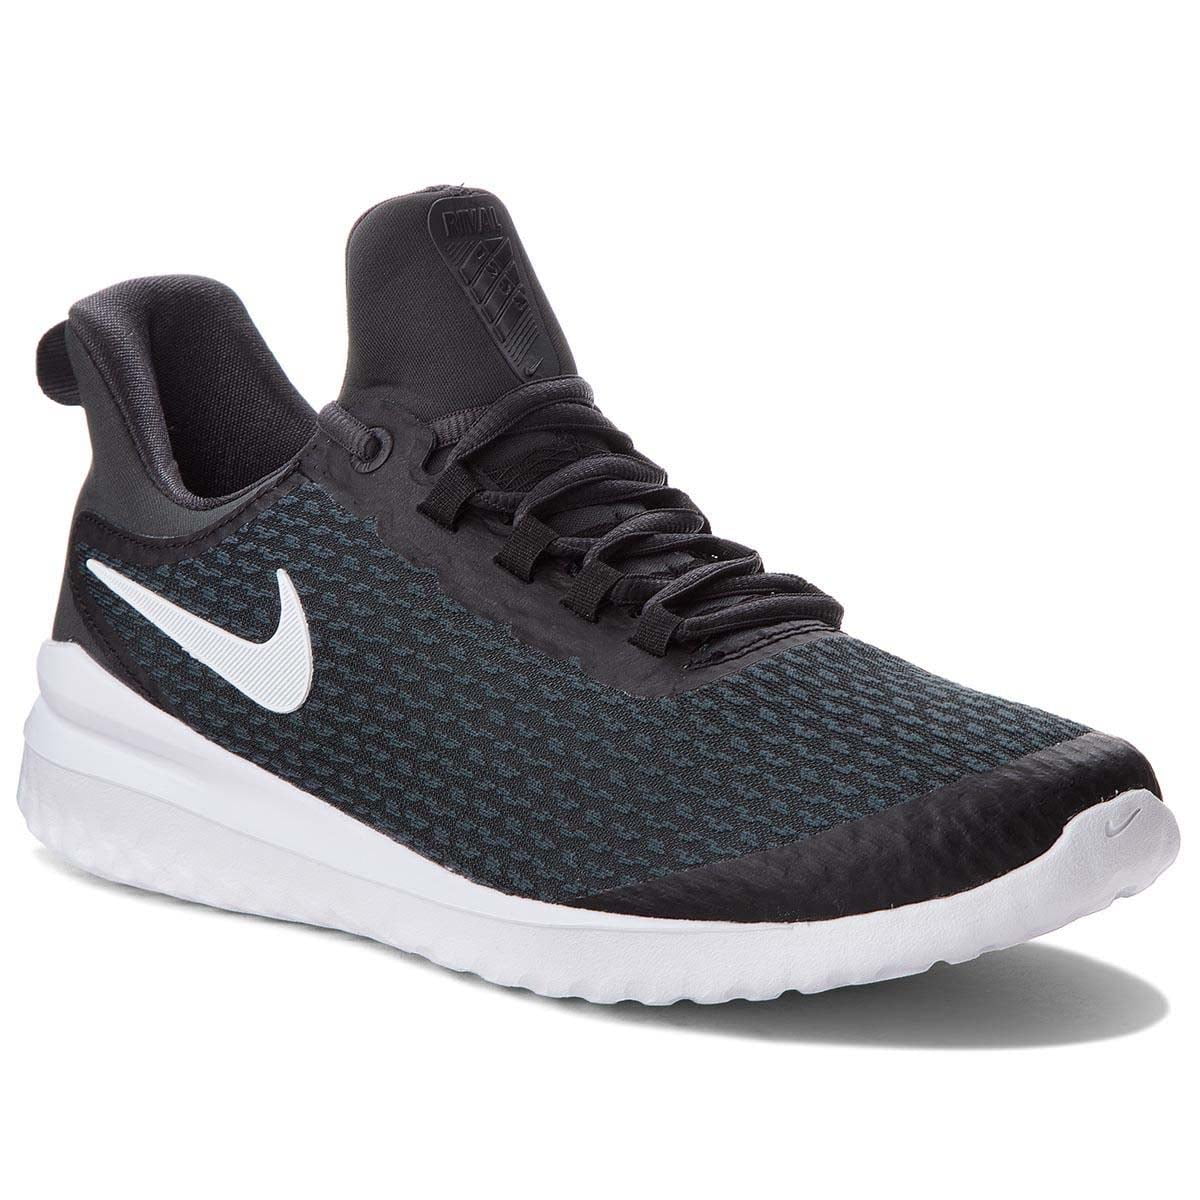 Nike Men's Renew Rival Running Shoes (13 M US, Black White Anthracite) -